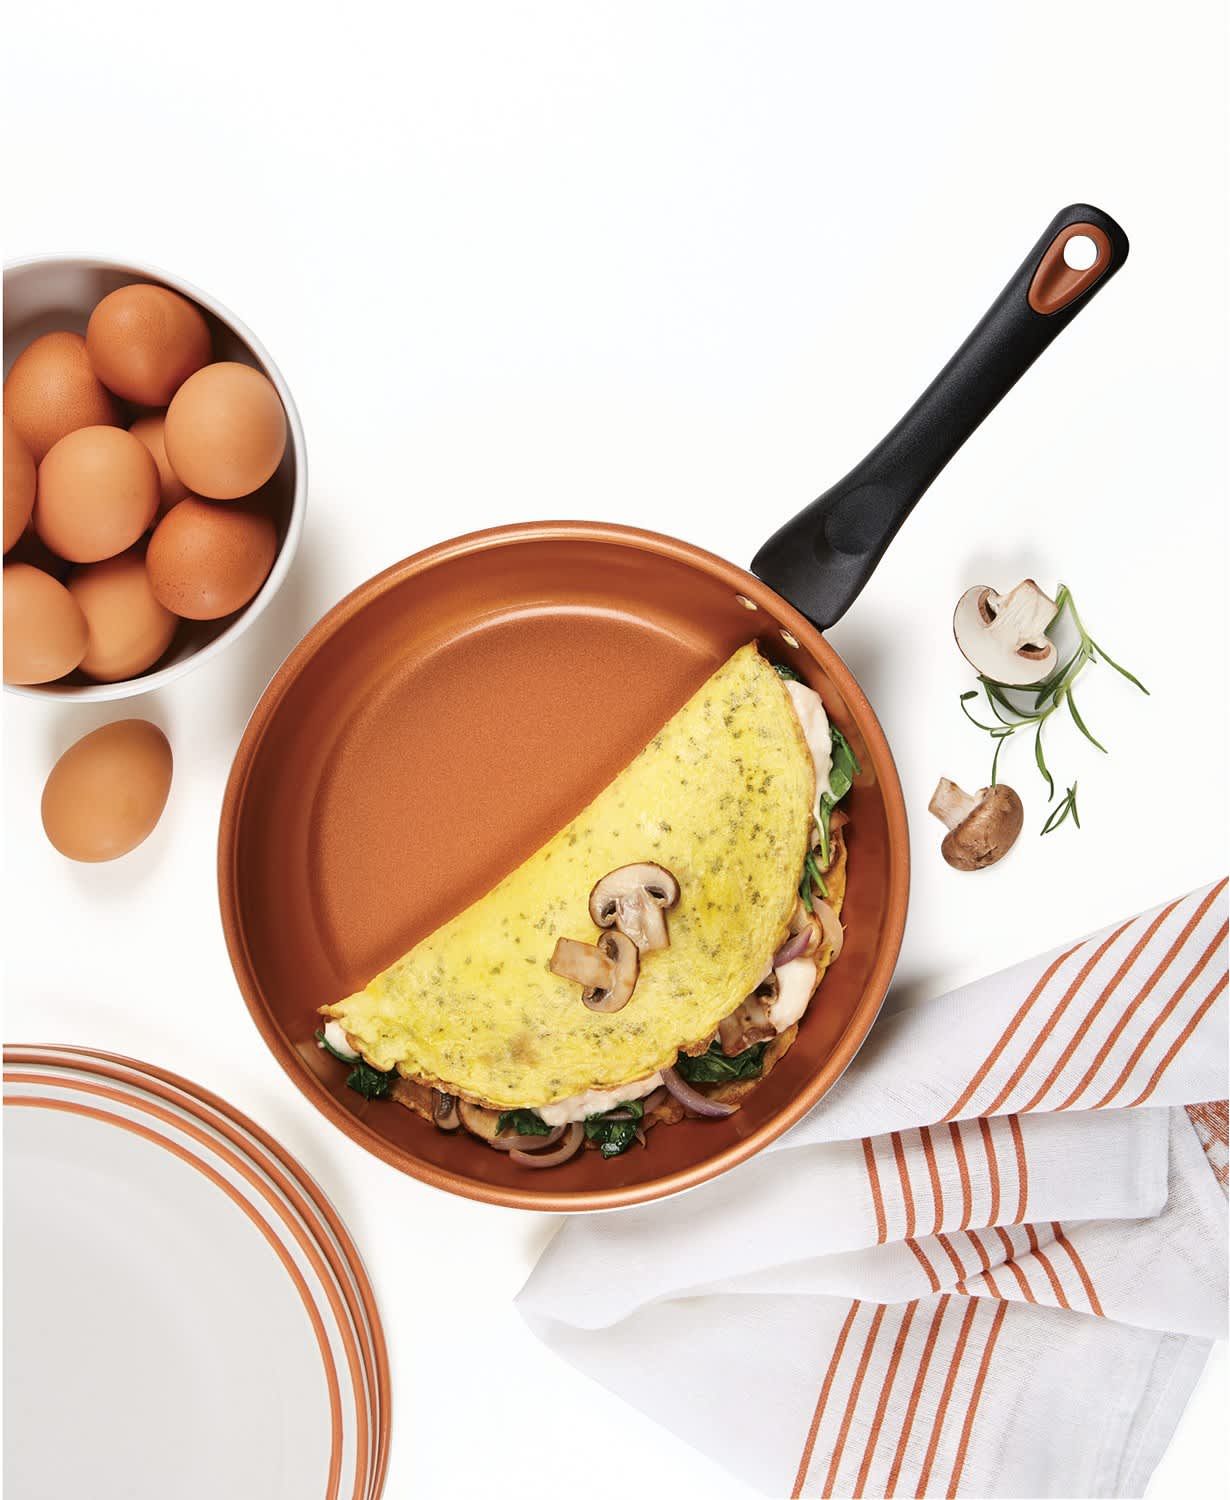 UNIWARE 1 Mini Egg Non-Stick Frying Pan,copper ceramic coating,55 (copper  gold)